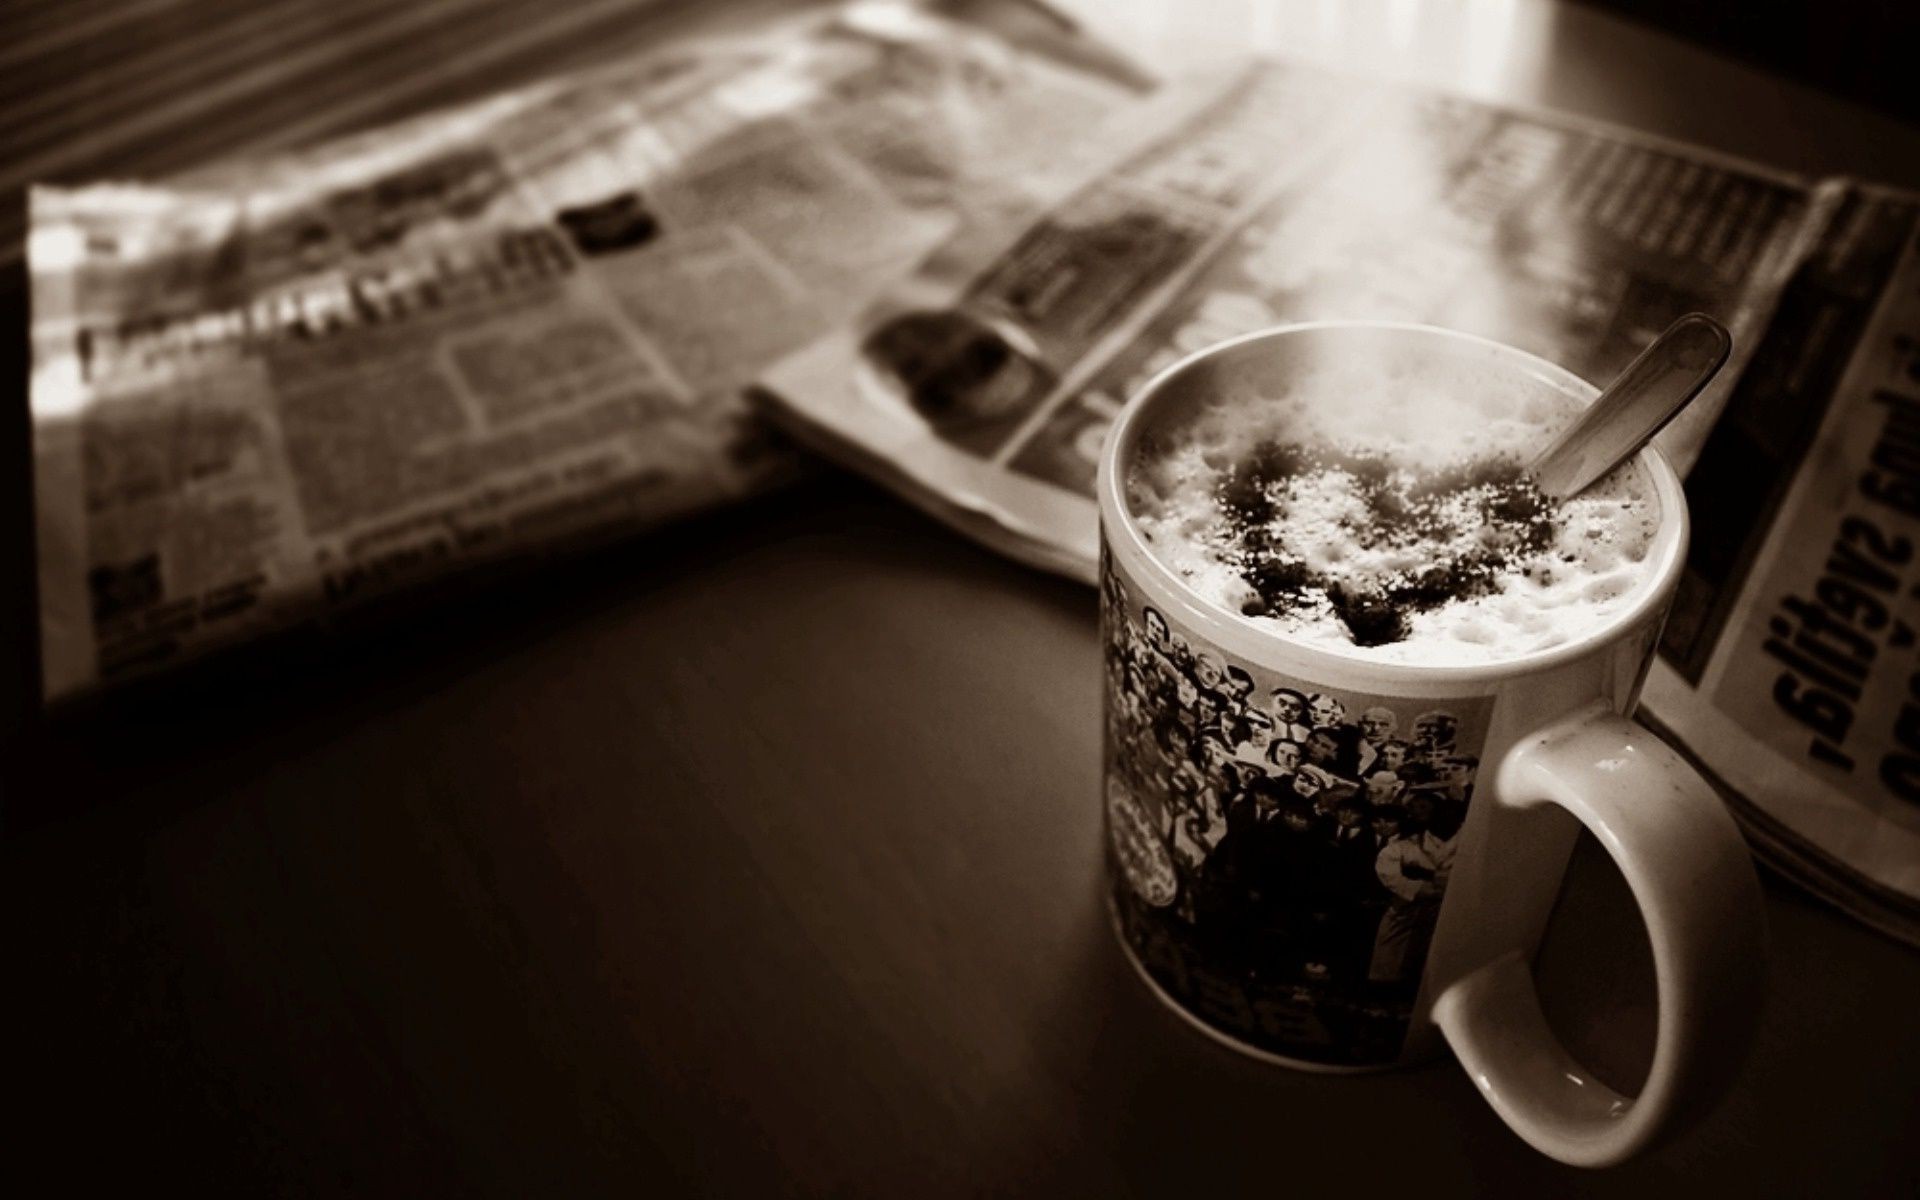 hearts coffee dawn espresso addiction dark caffeine drink cup business desktop hot smoke cappuccino breakfast